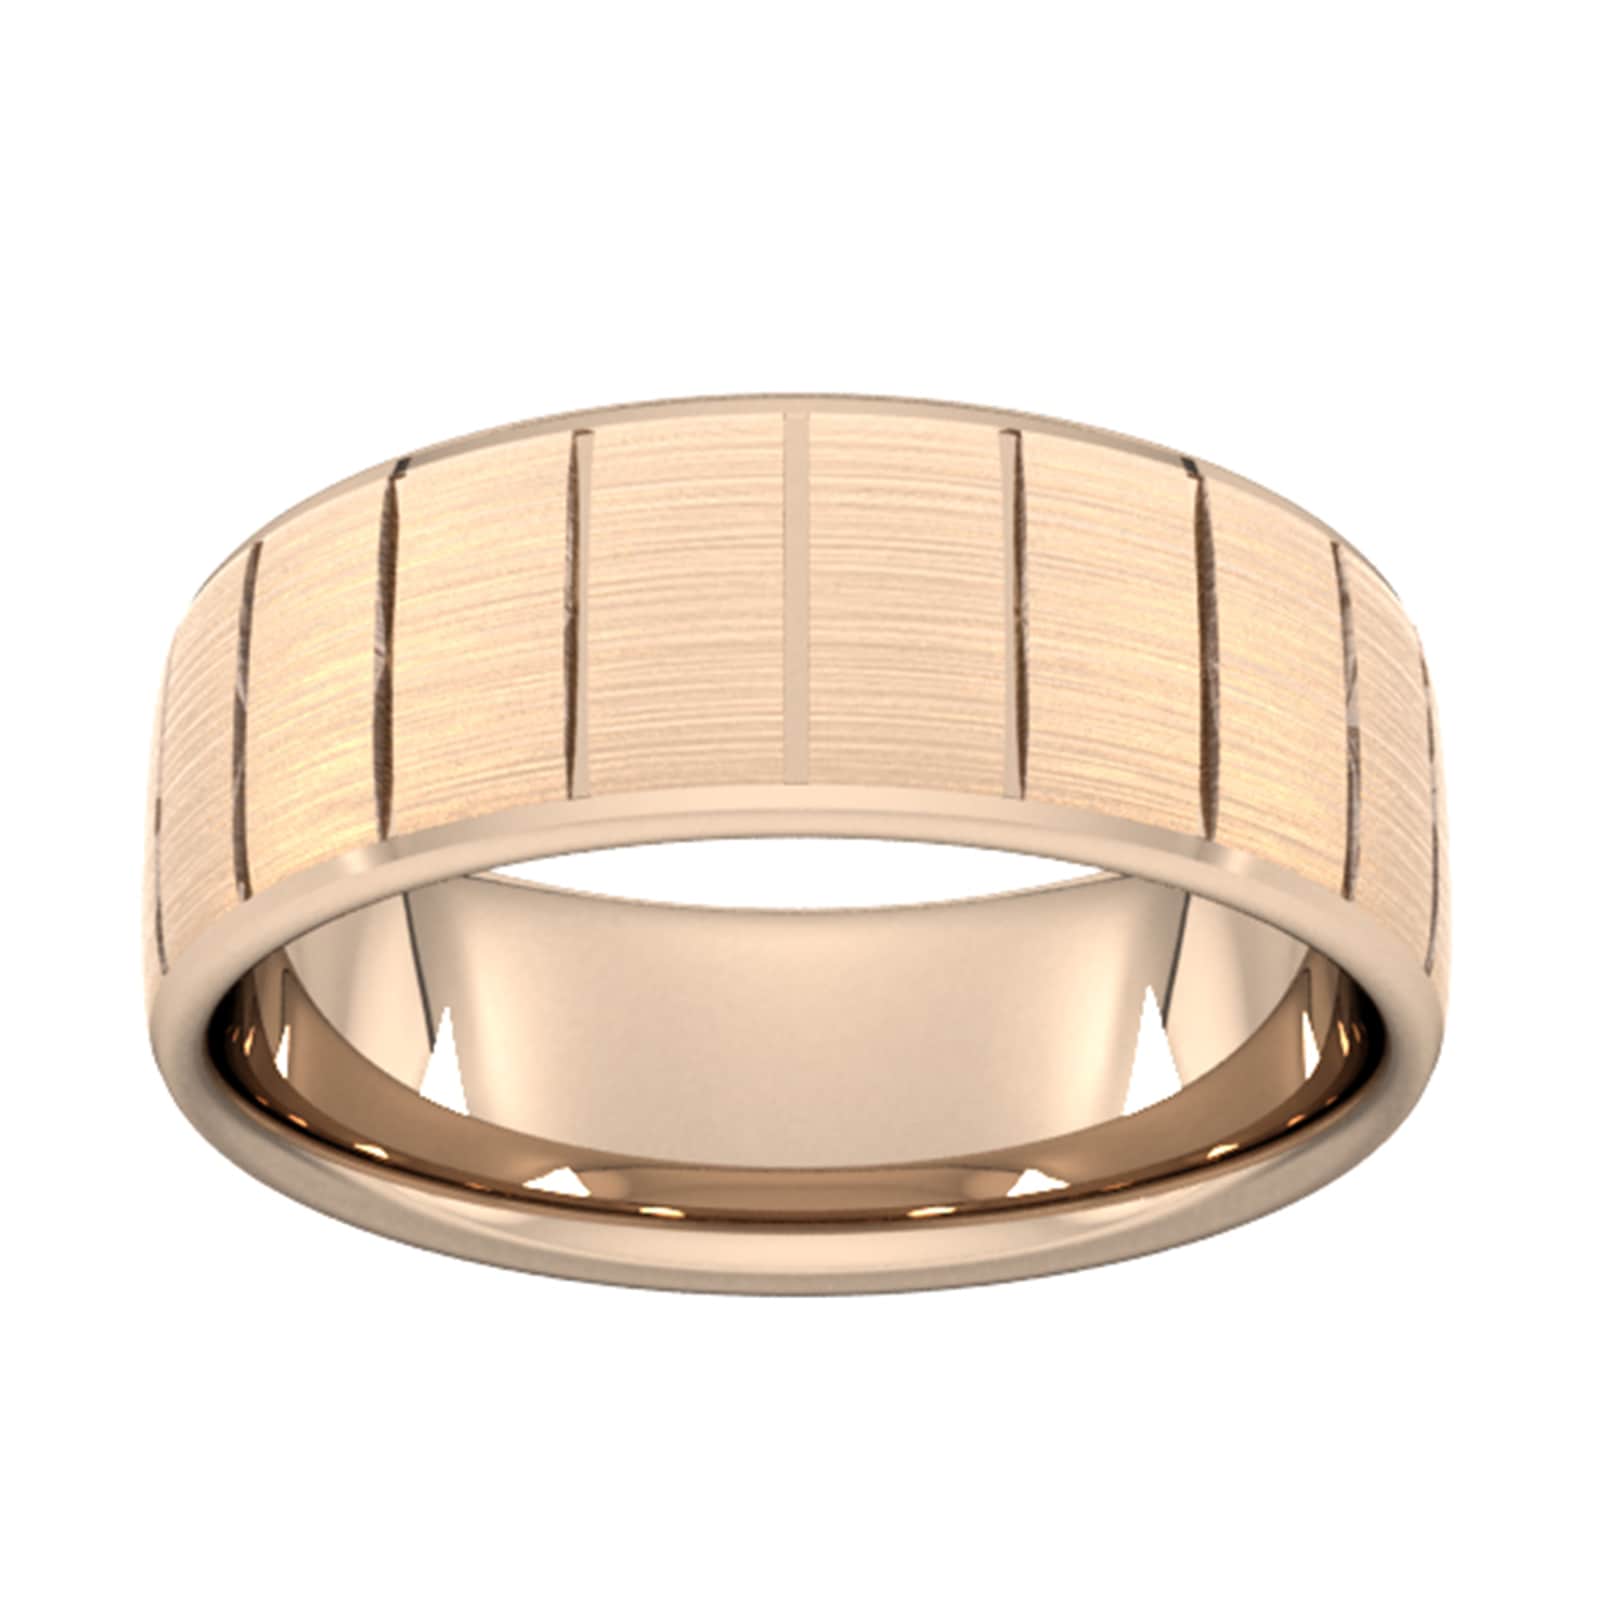 8mm D Shape Standard Vertical Lines Wedding Ring In 9 Carat Rose Gold - Ring Size S